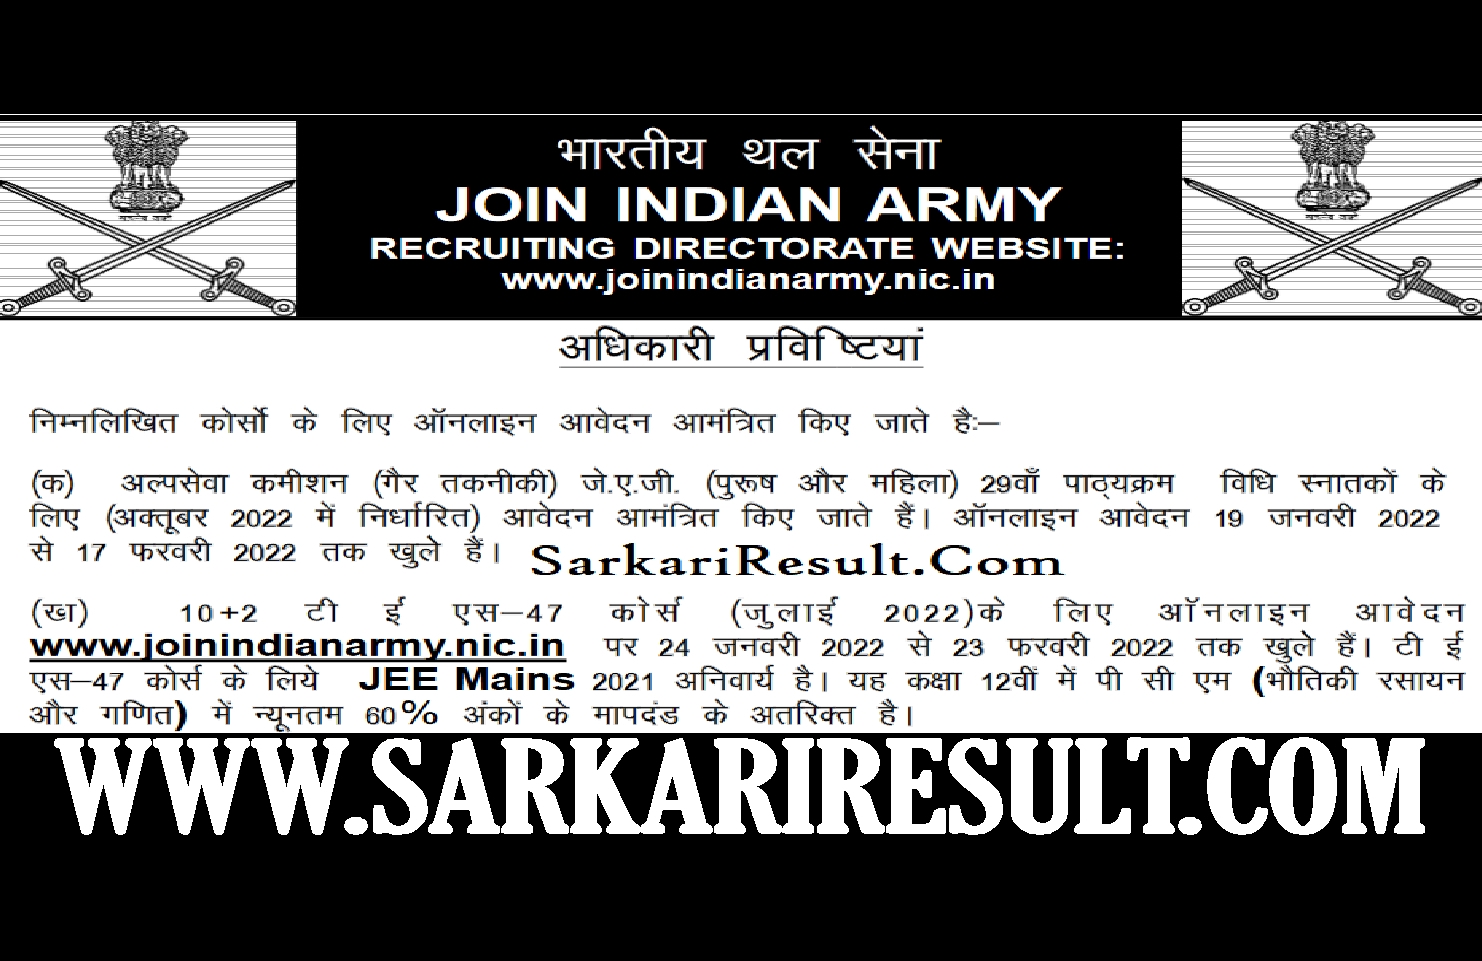 Sarkari Result Army TES 47 Batch Online Form 2022